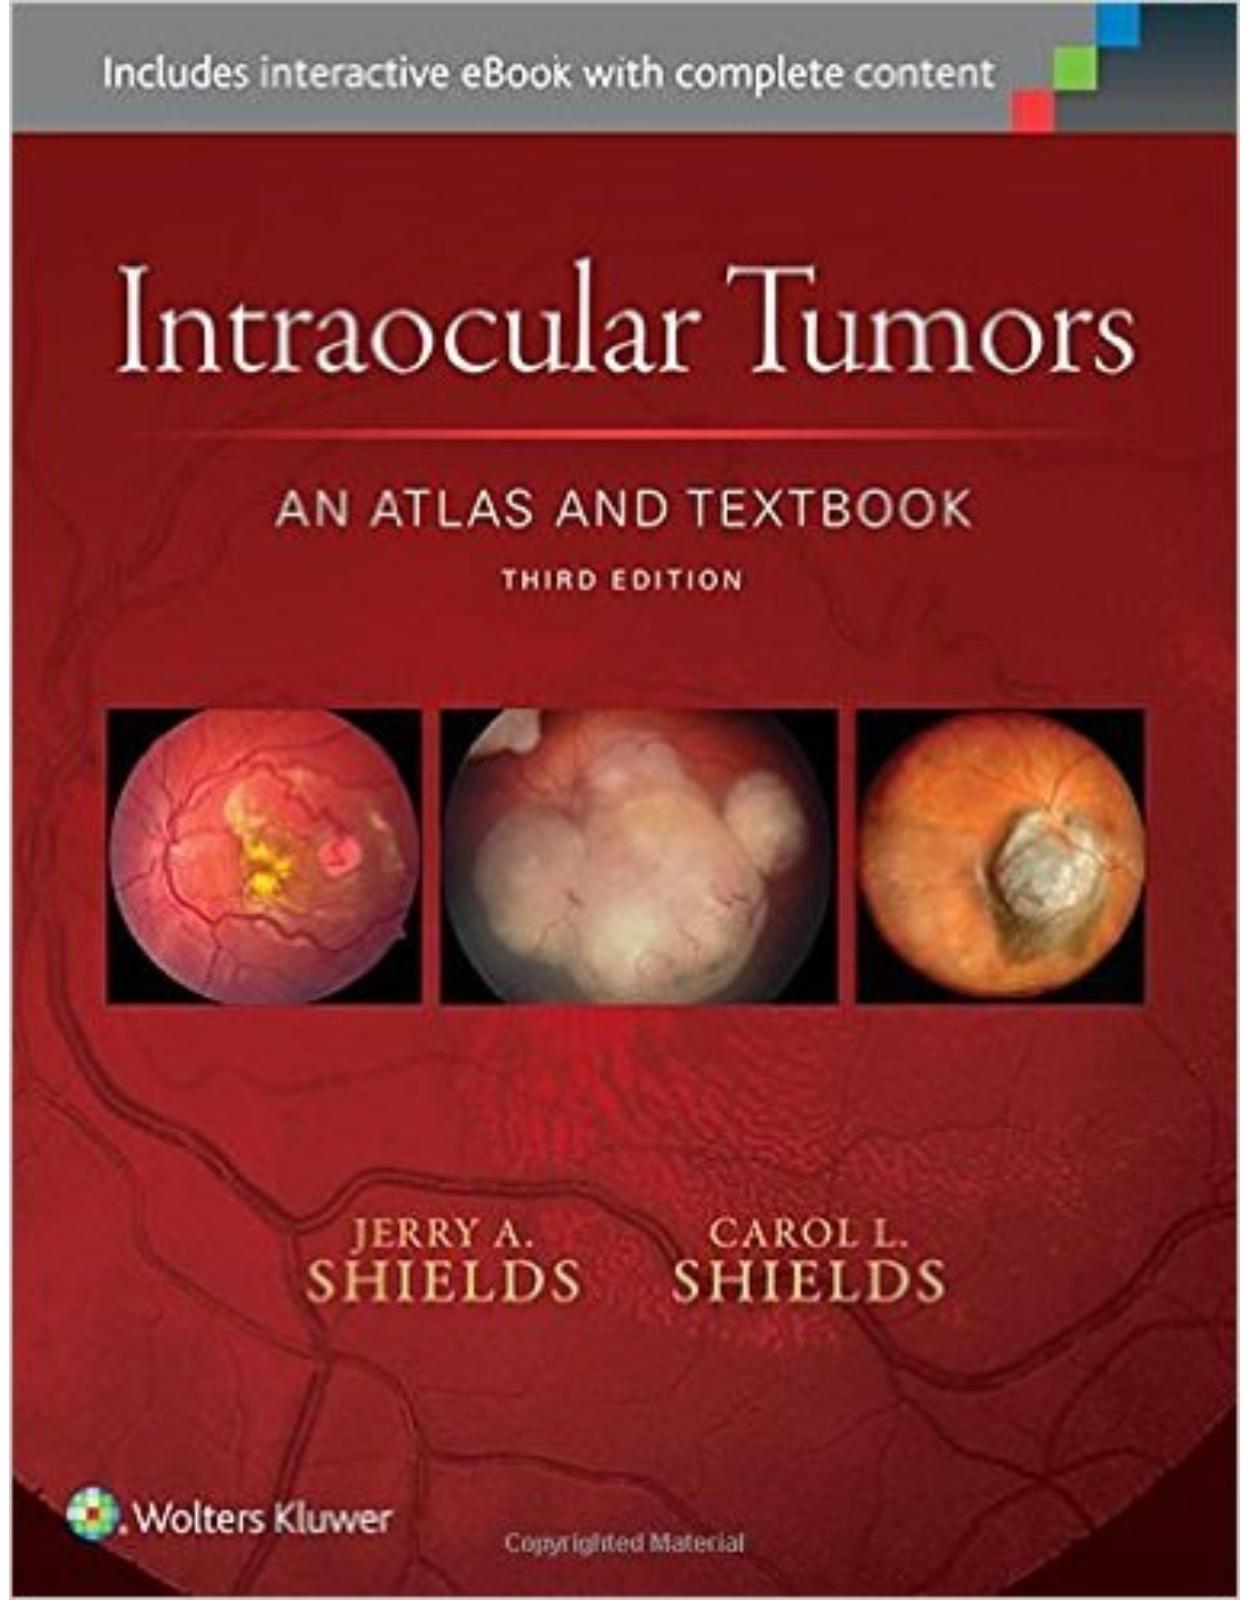 Intraocular Tumors: An Atlas and Textbook Third Edition